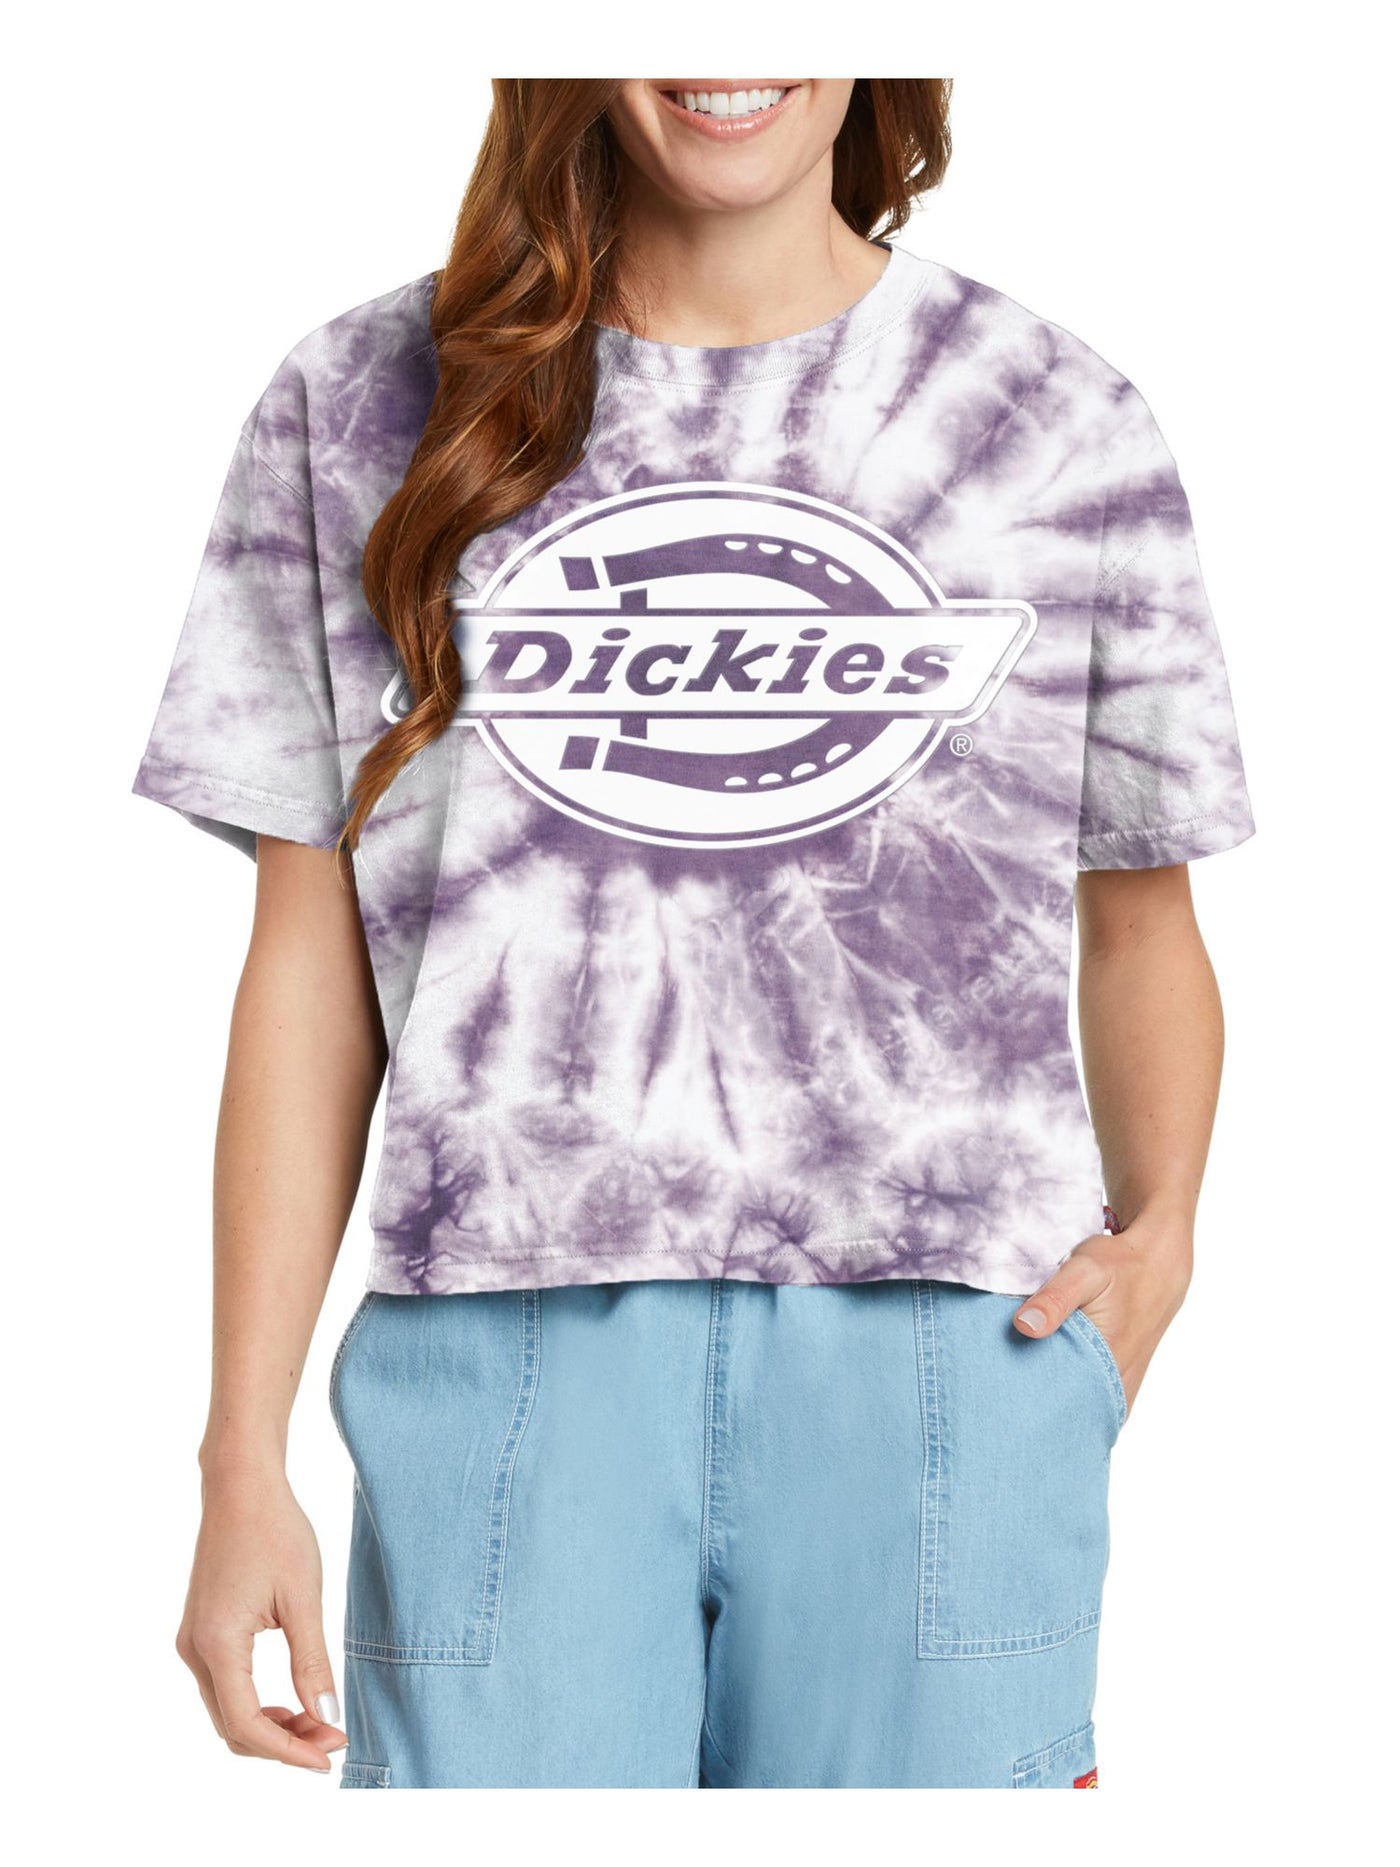 DICKIES Womens Purple Short Length Relaxed Fit Tie Dye Short Sleeve Crew Neck T-Shirt Juniors S